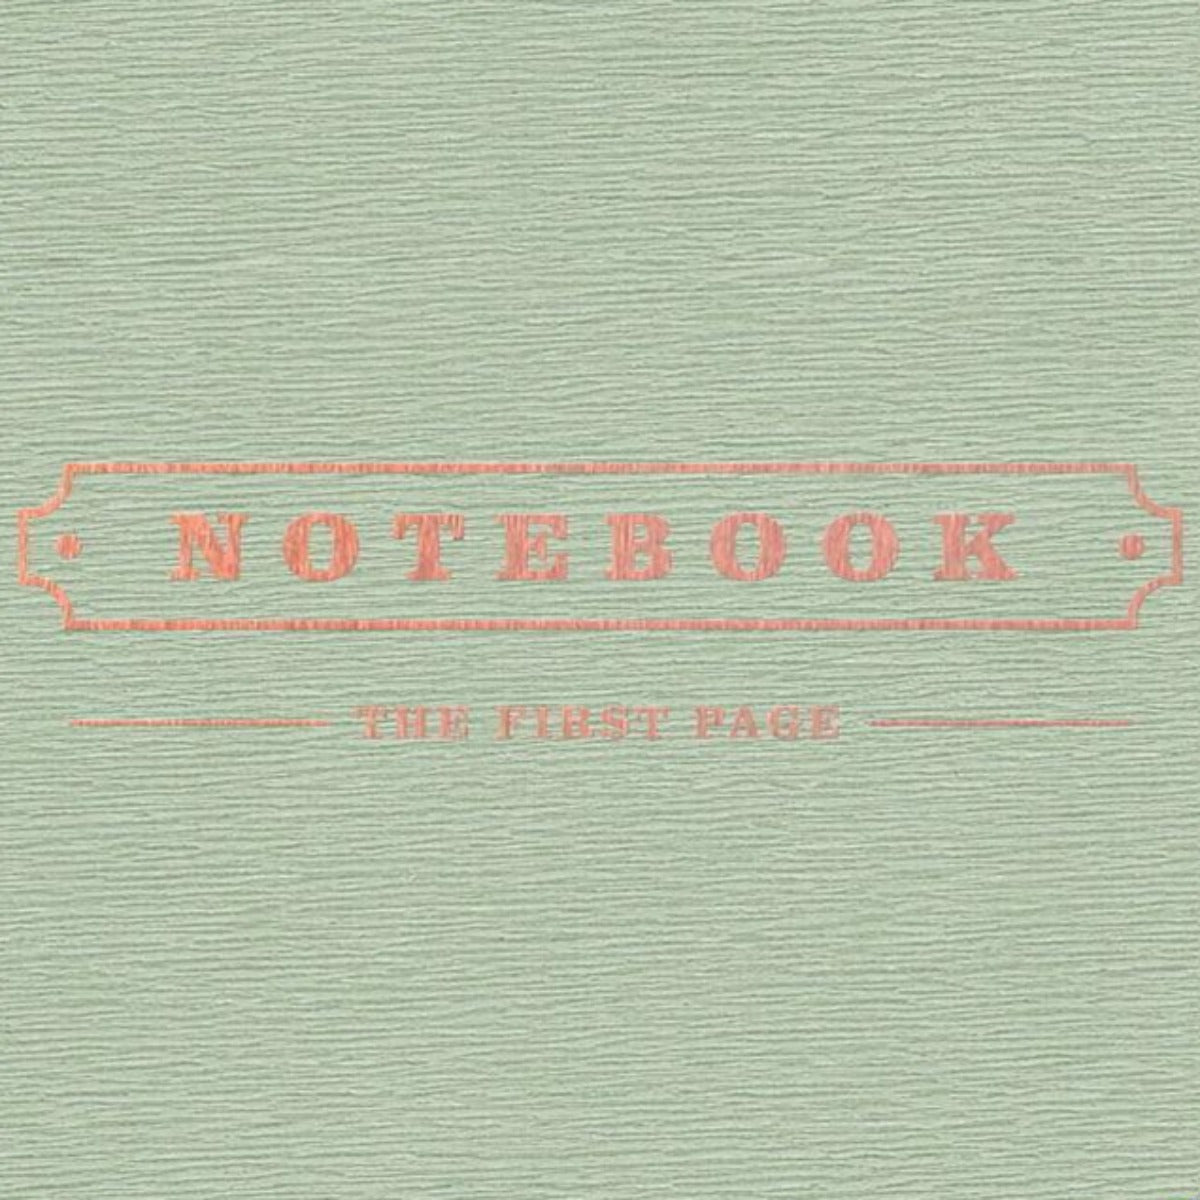 Block B: Park Kyung Mini Album Vol. 1 - Notebook